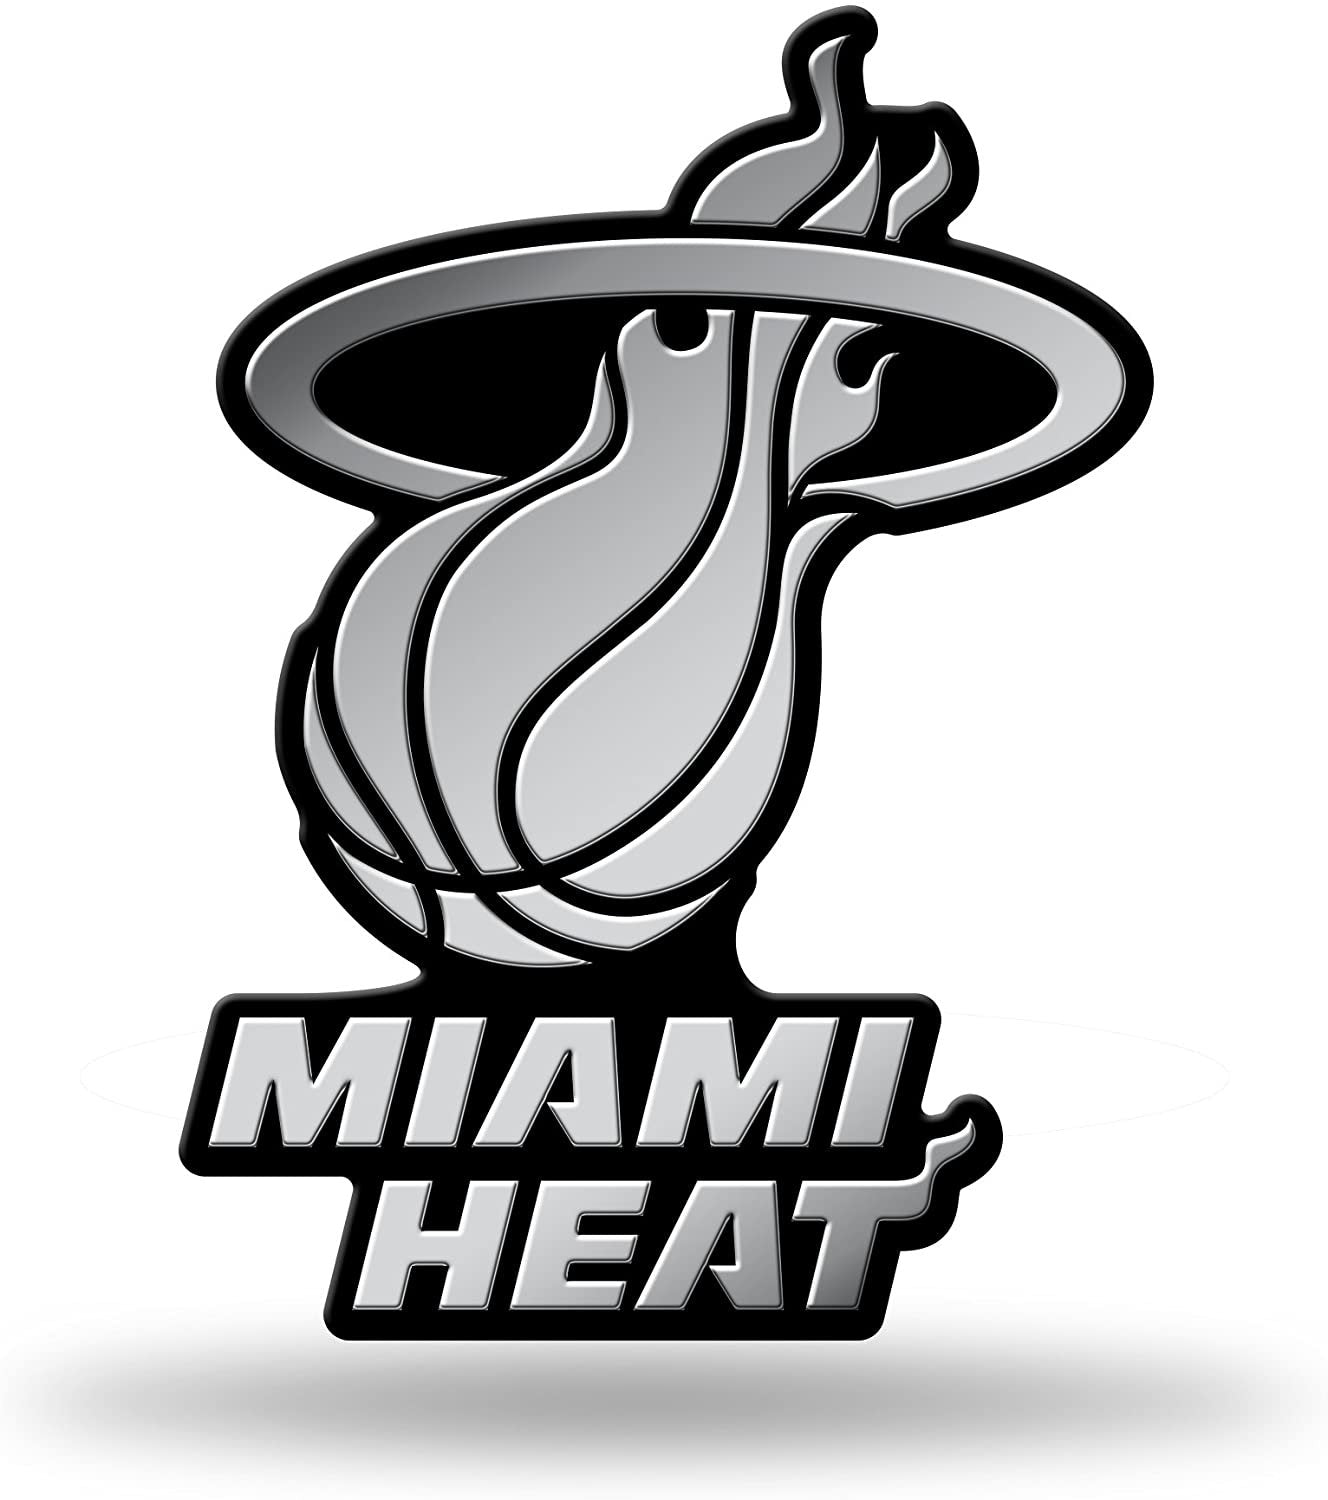 Miami Heat Auto Emblem, Plastic Molded, Silver Chrome Color, Raised 3D Effect, Adhesive Backing